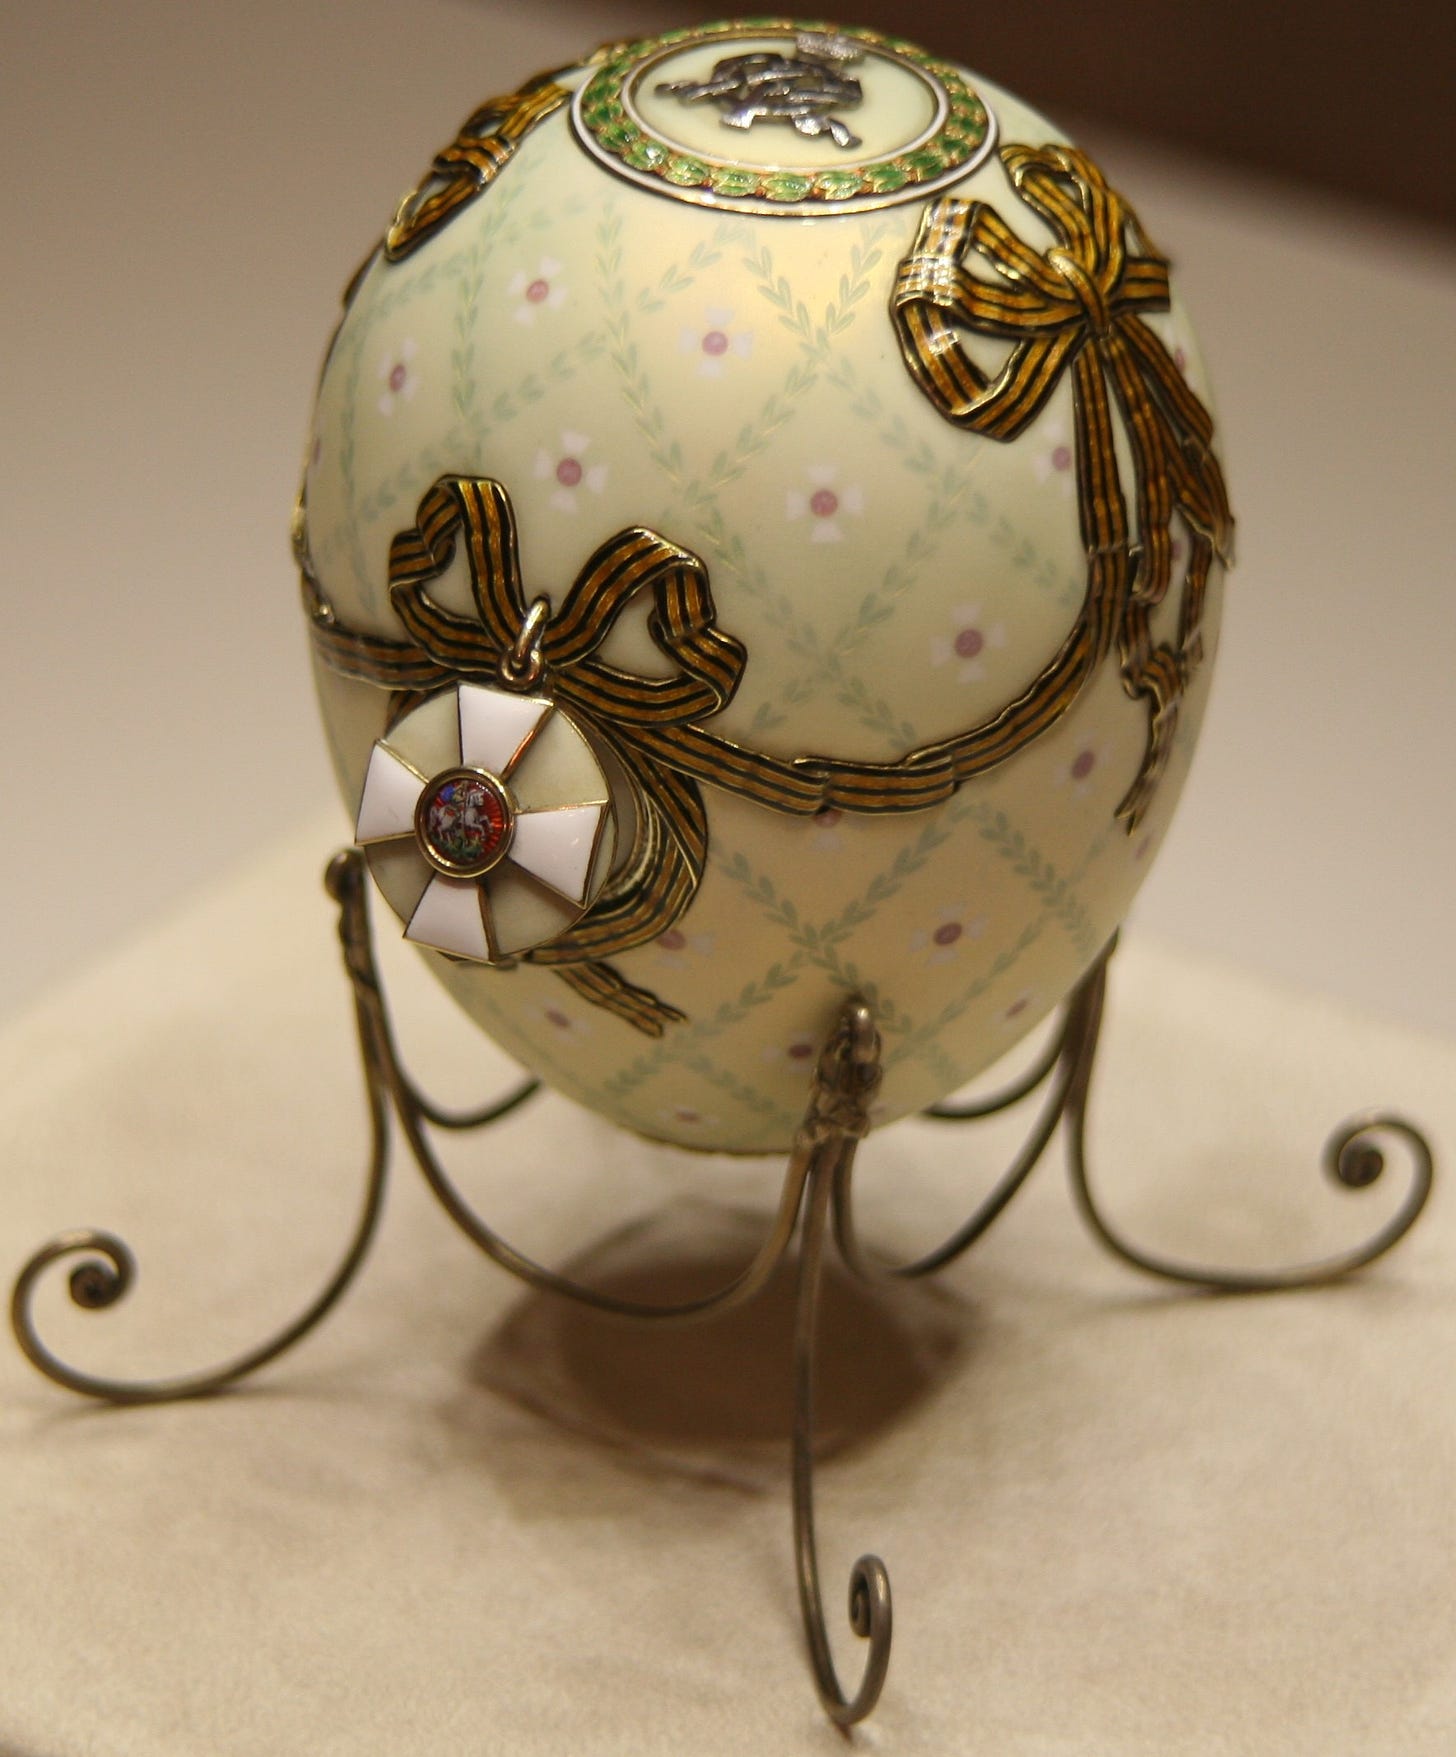 https://upload.wikimedia.org/wikipedia/commons/6/6e/Order_of_St.George_Faberge_Egg.jpg